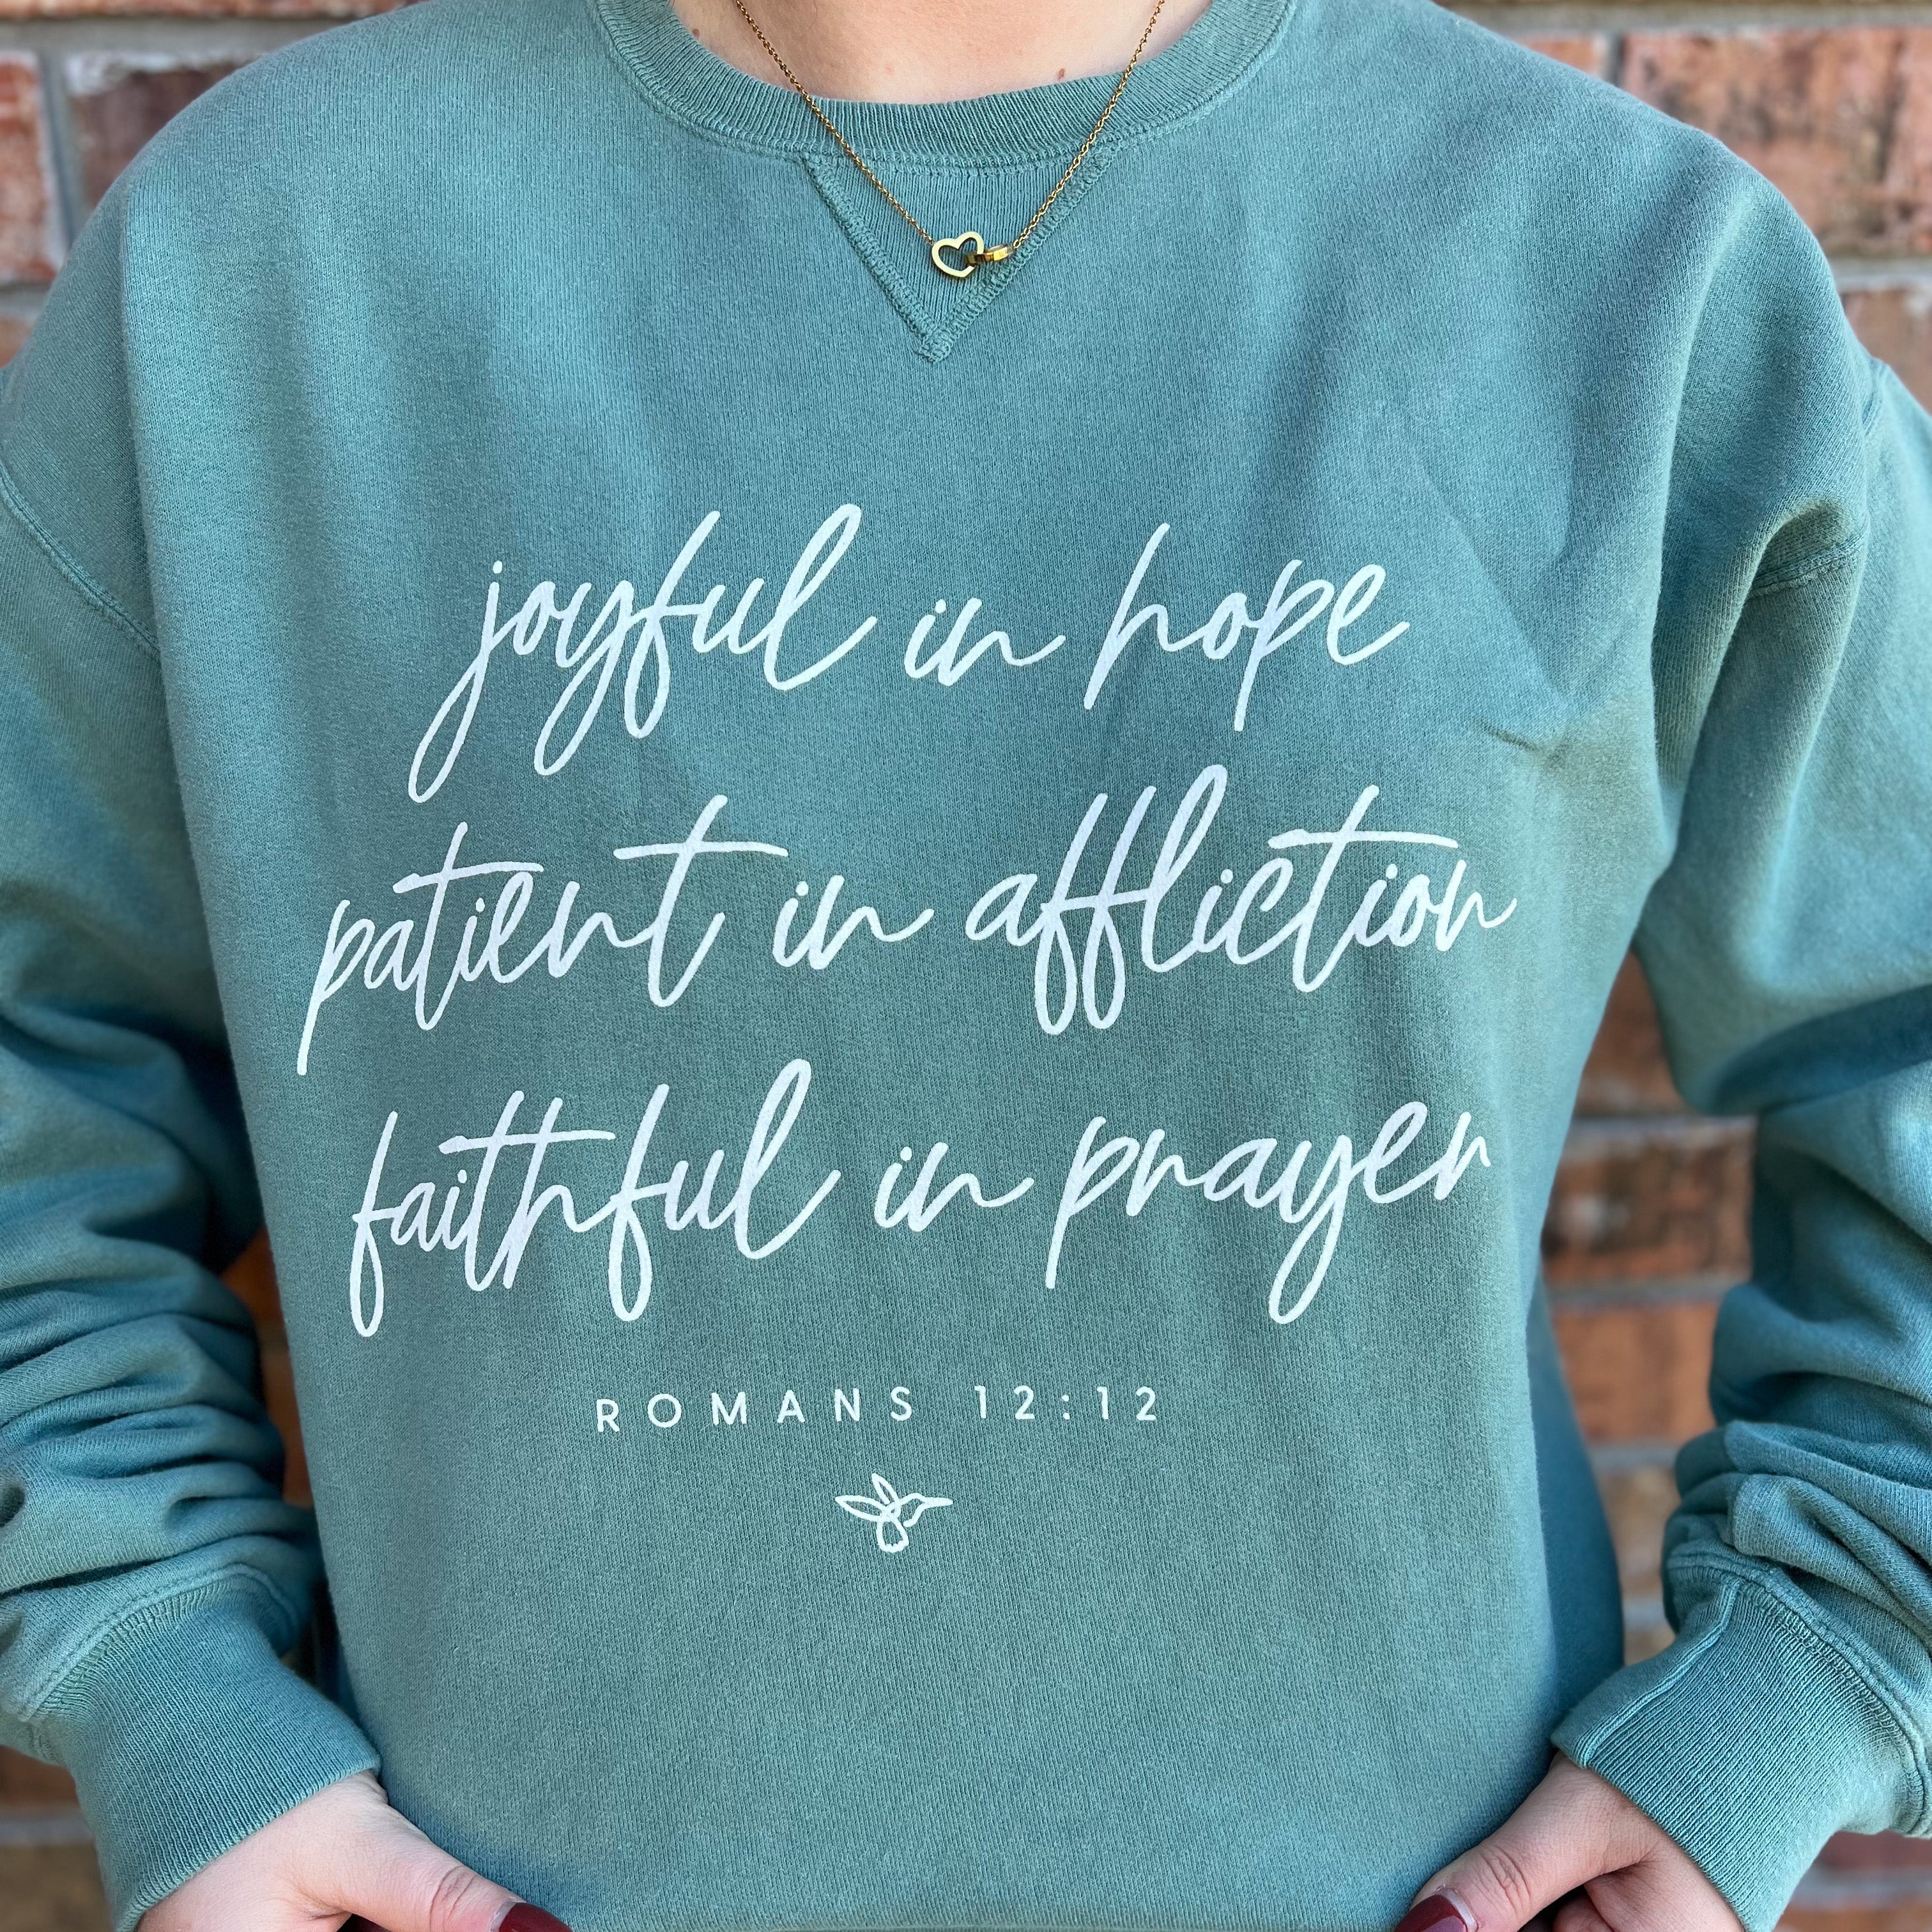 Exclusive!! Limited Edition Romans 12:12 Sweatshirts